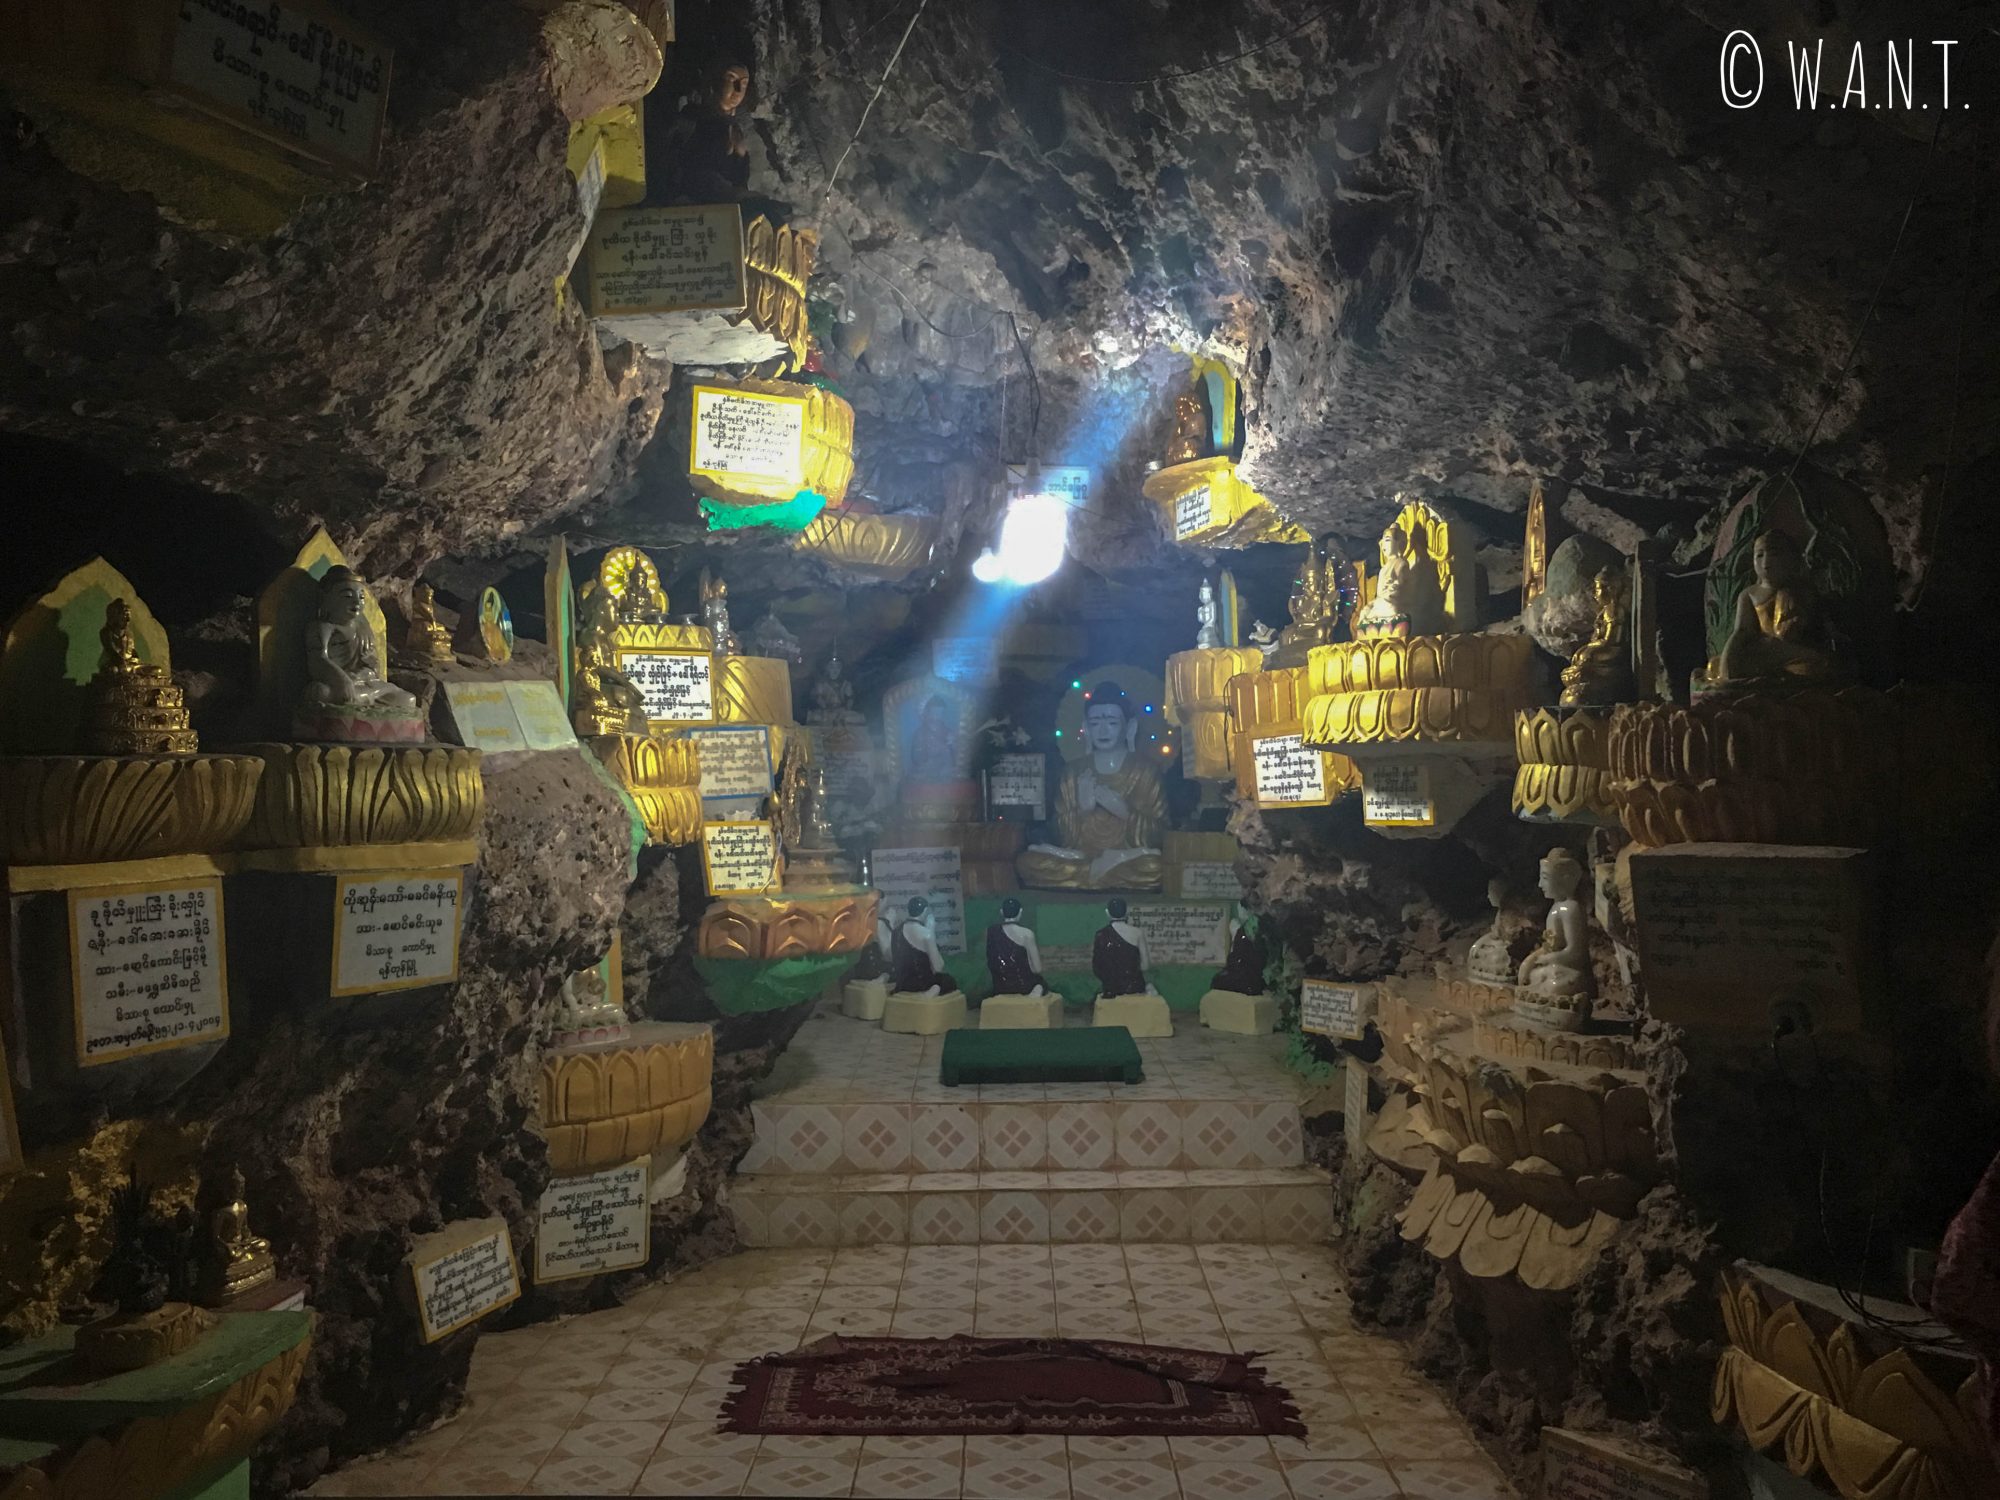 Echantillons de statues de Bouddha dans la grotte de la pagode Shwe oo min